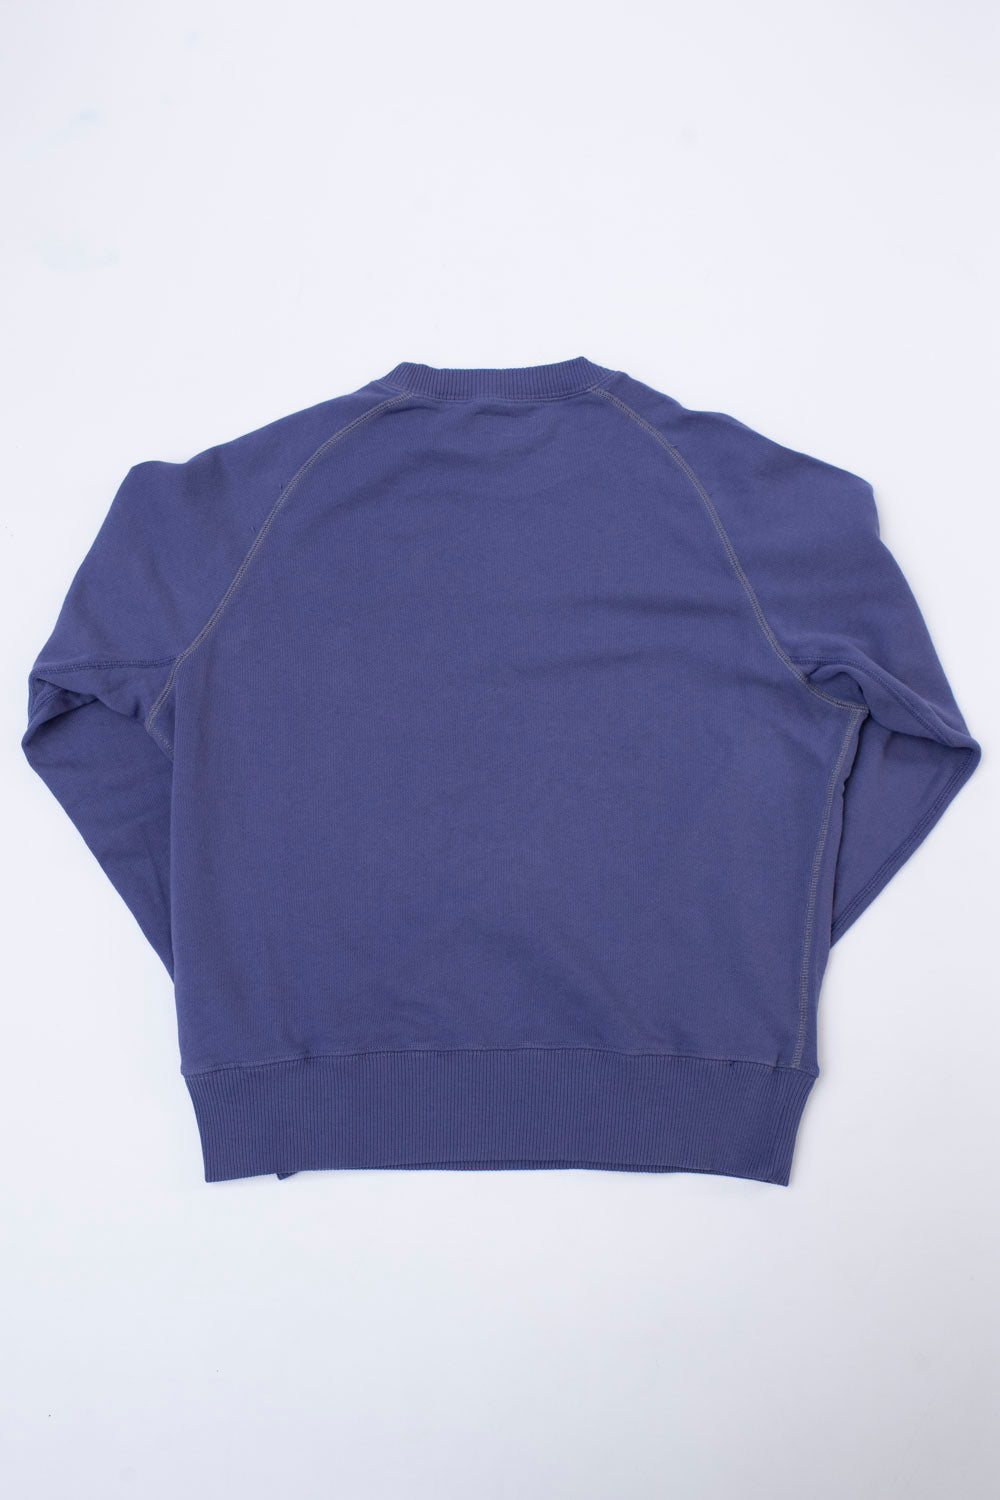 RGSW01.504 - 10.6oz Organic Cotton Blu Fit Purple Relaxed | Sweatshirt Dant - James